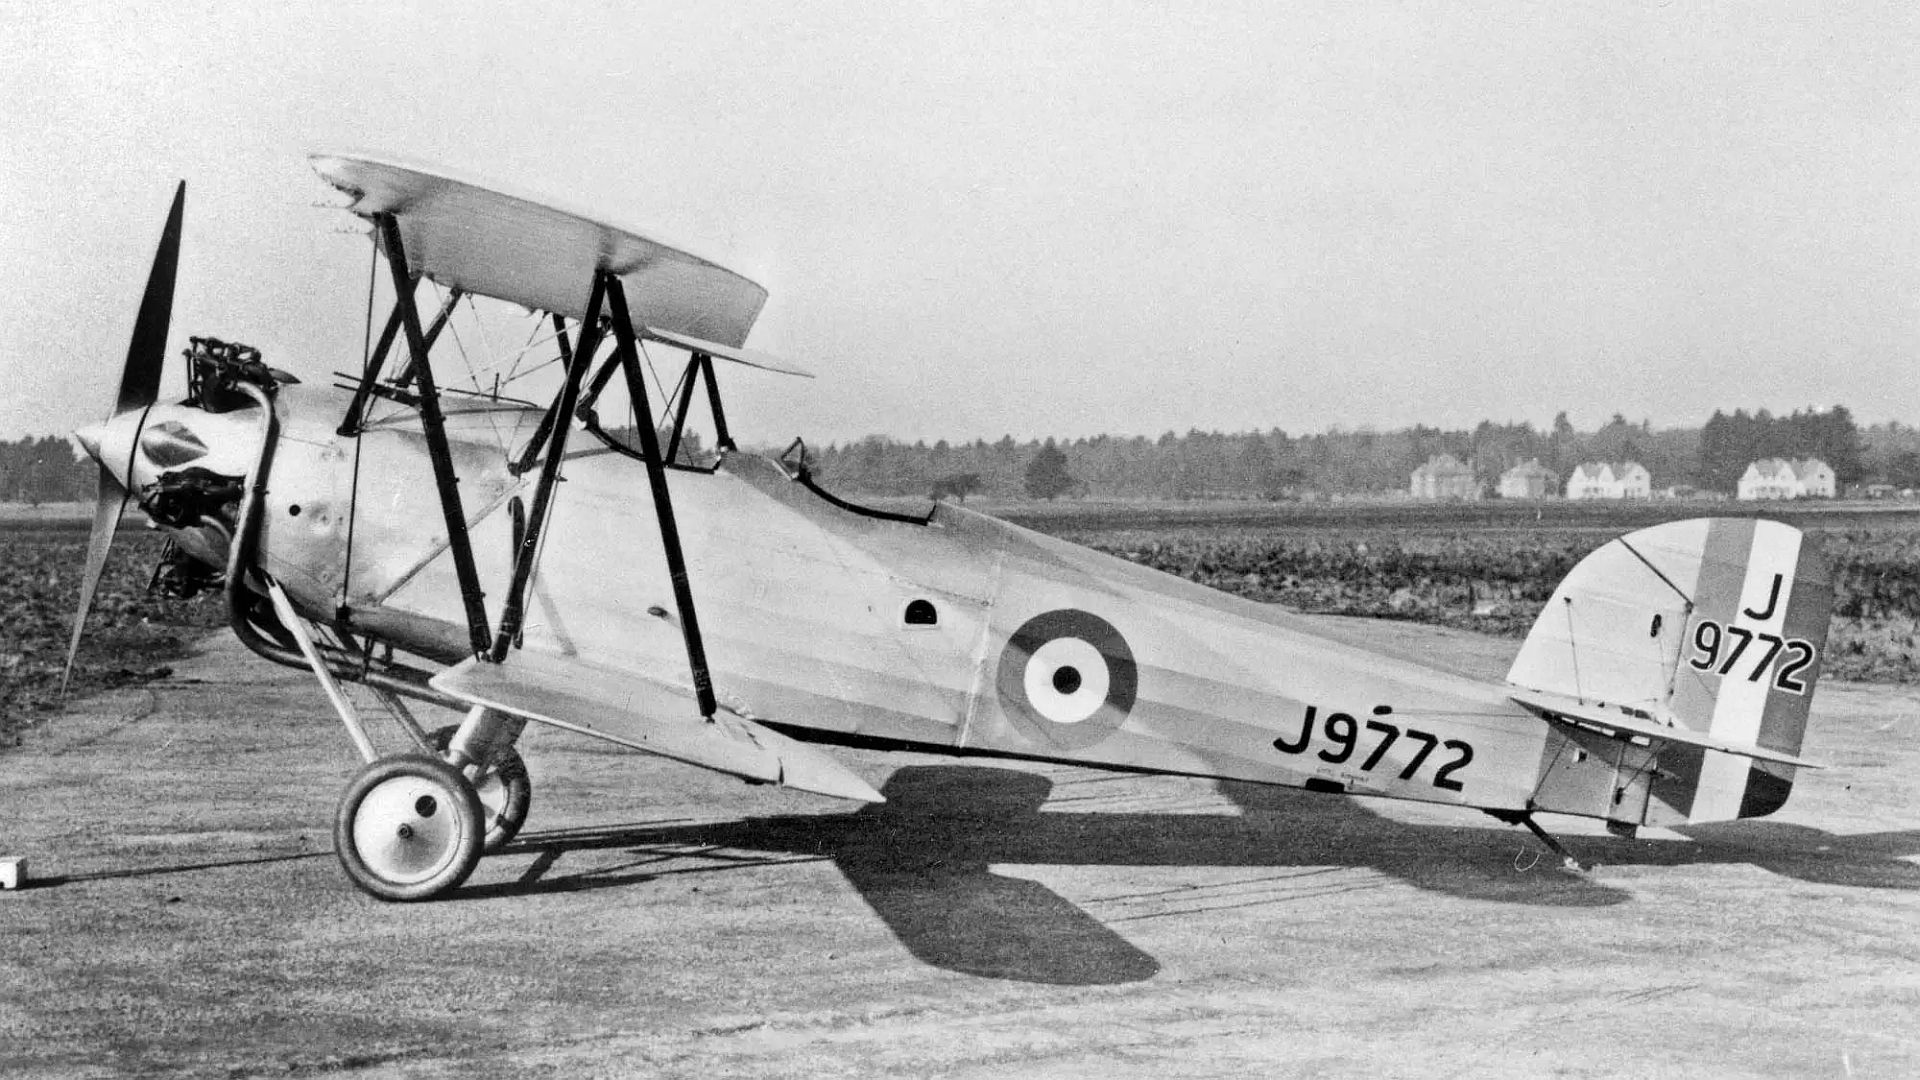 Hawker Tomtit Prototype J9772 Undergoing Trials At Martlesham Heath